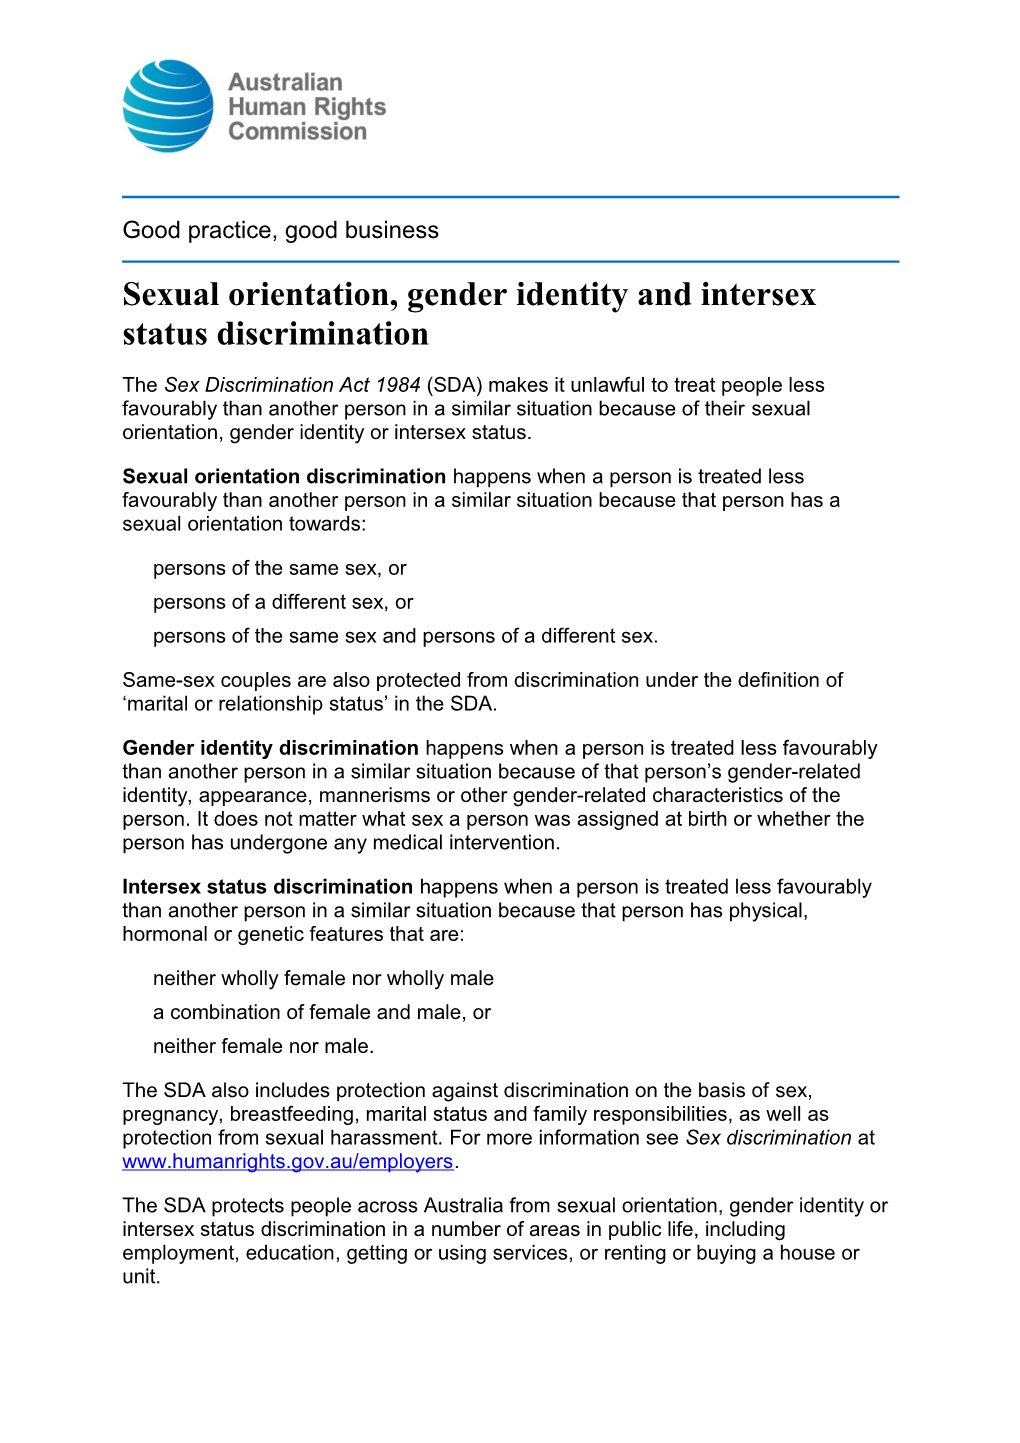 Sexual Orientation, Gender Identity and Intersex Status Discrimination